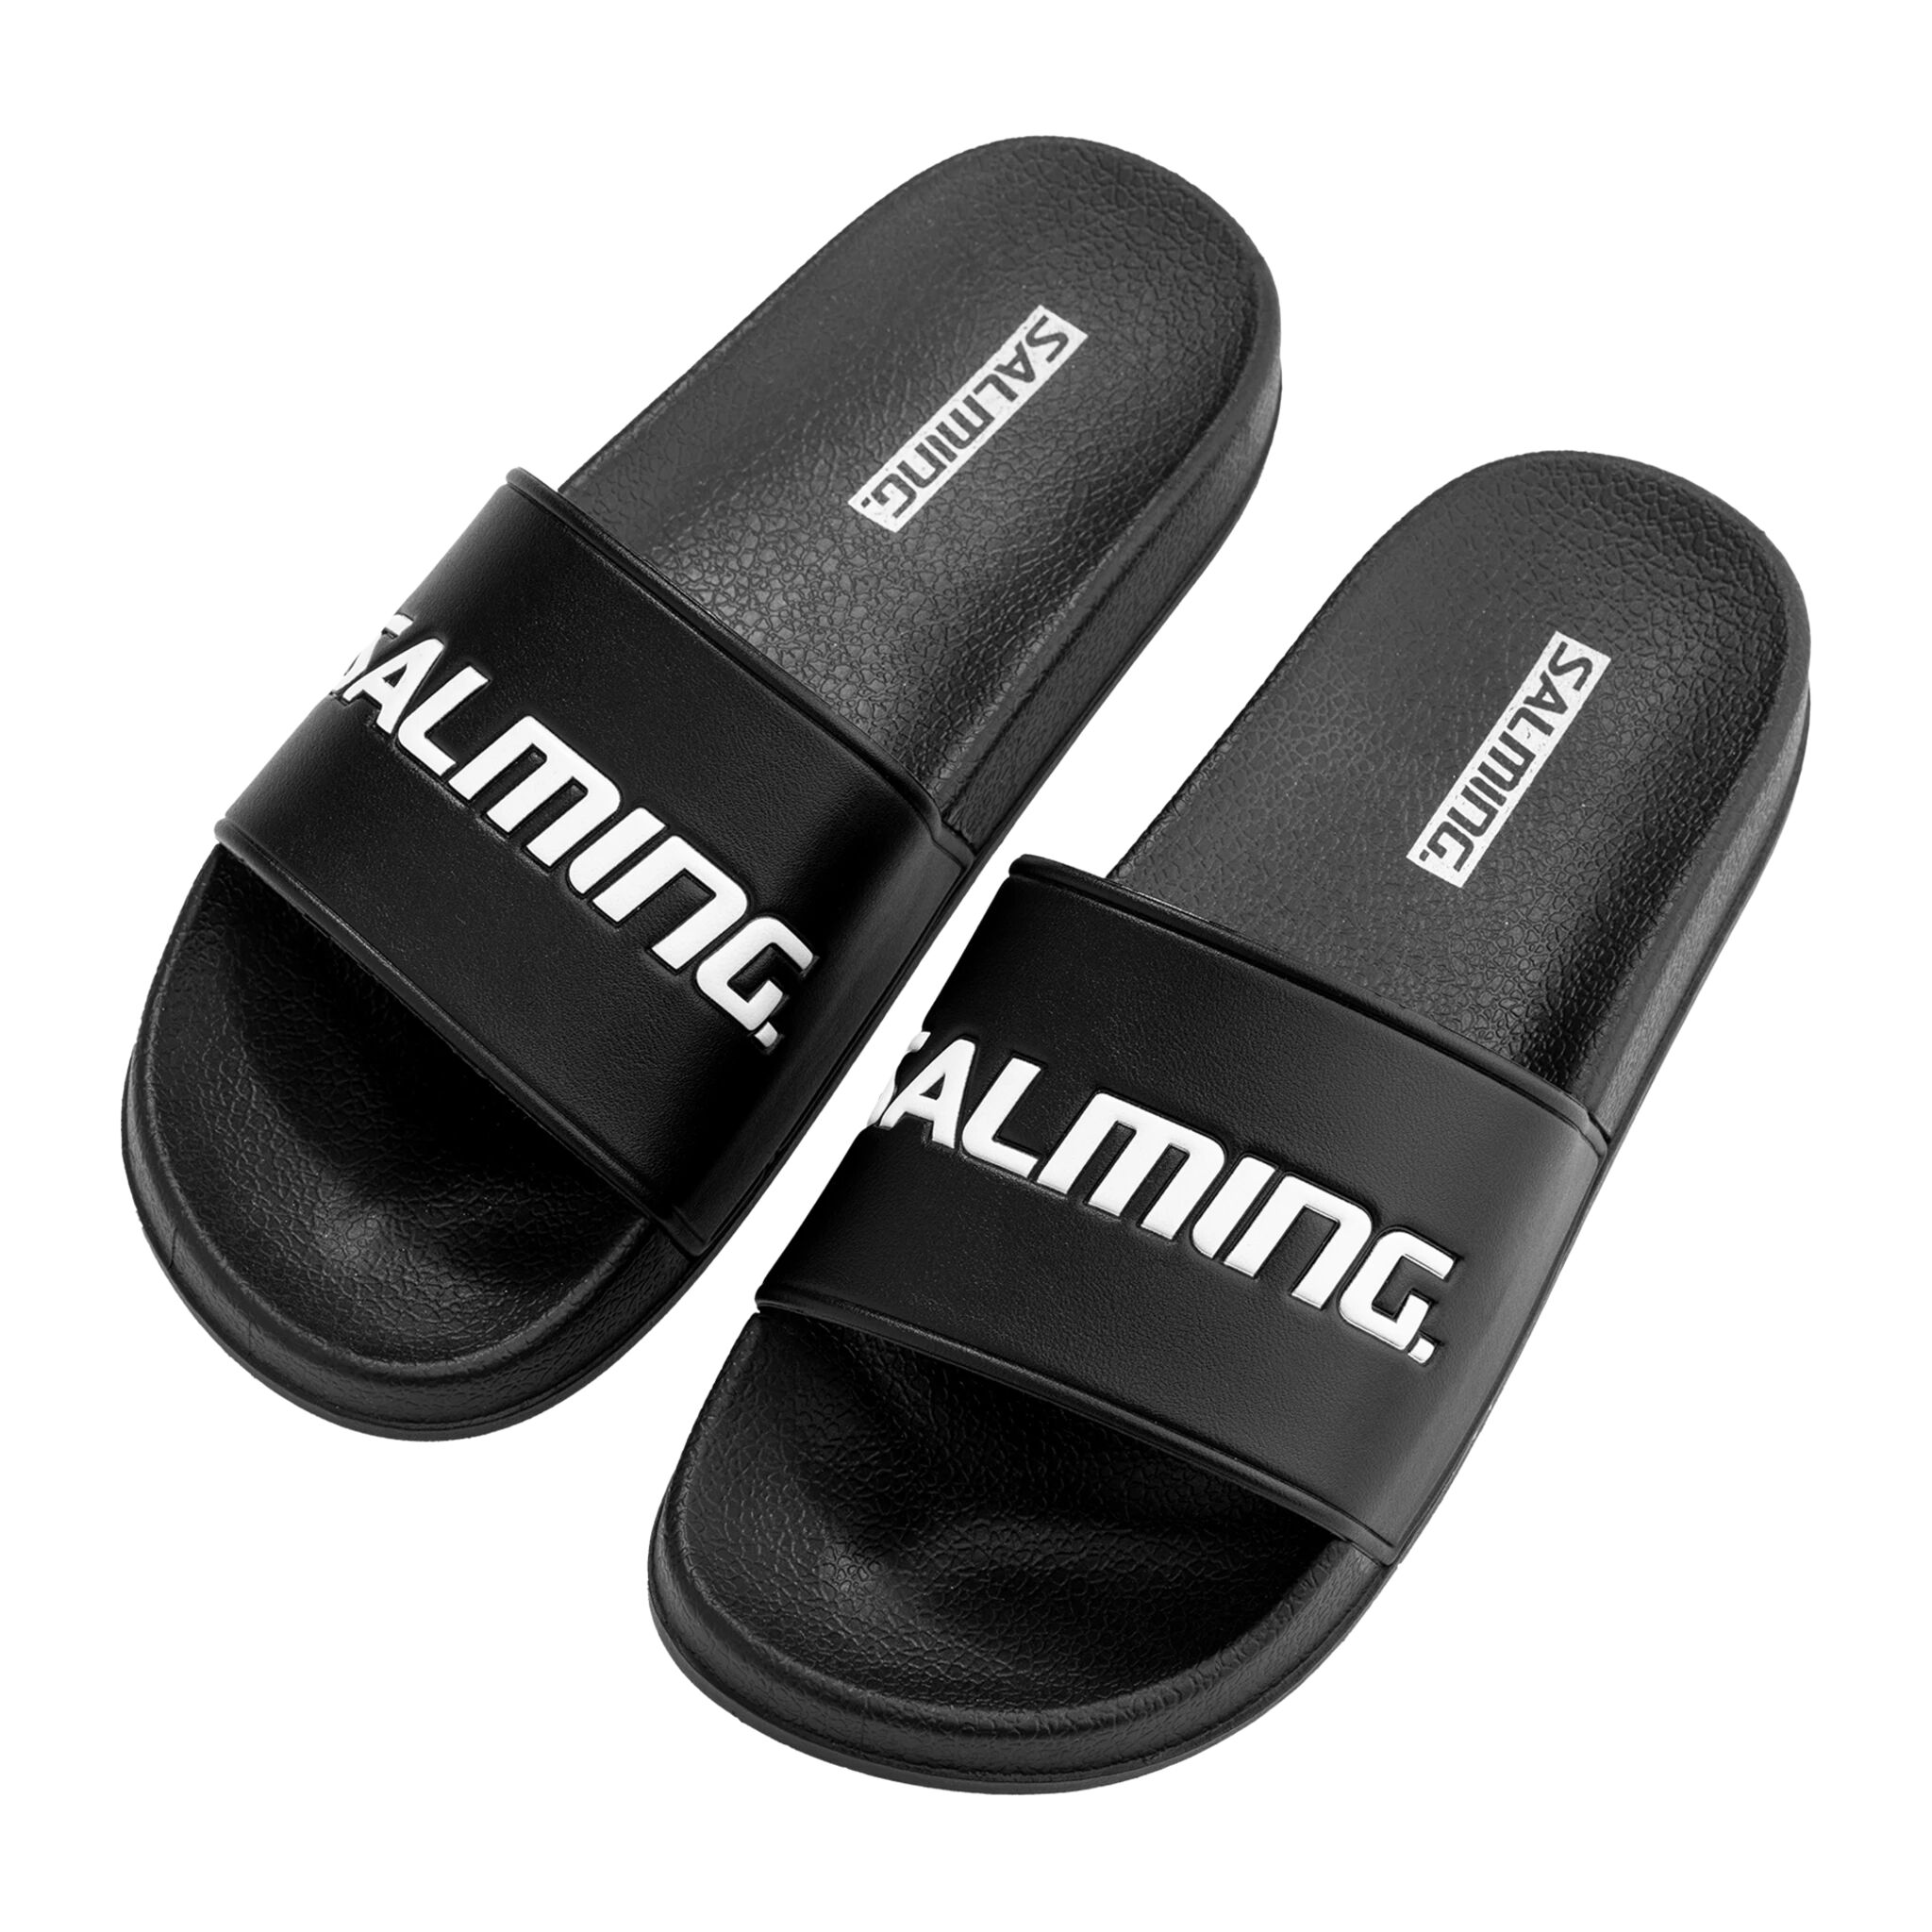 Salming Comfort Shower Sandal JR/SR-21/22, slippers 36/37 BLACK